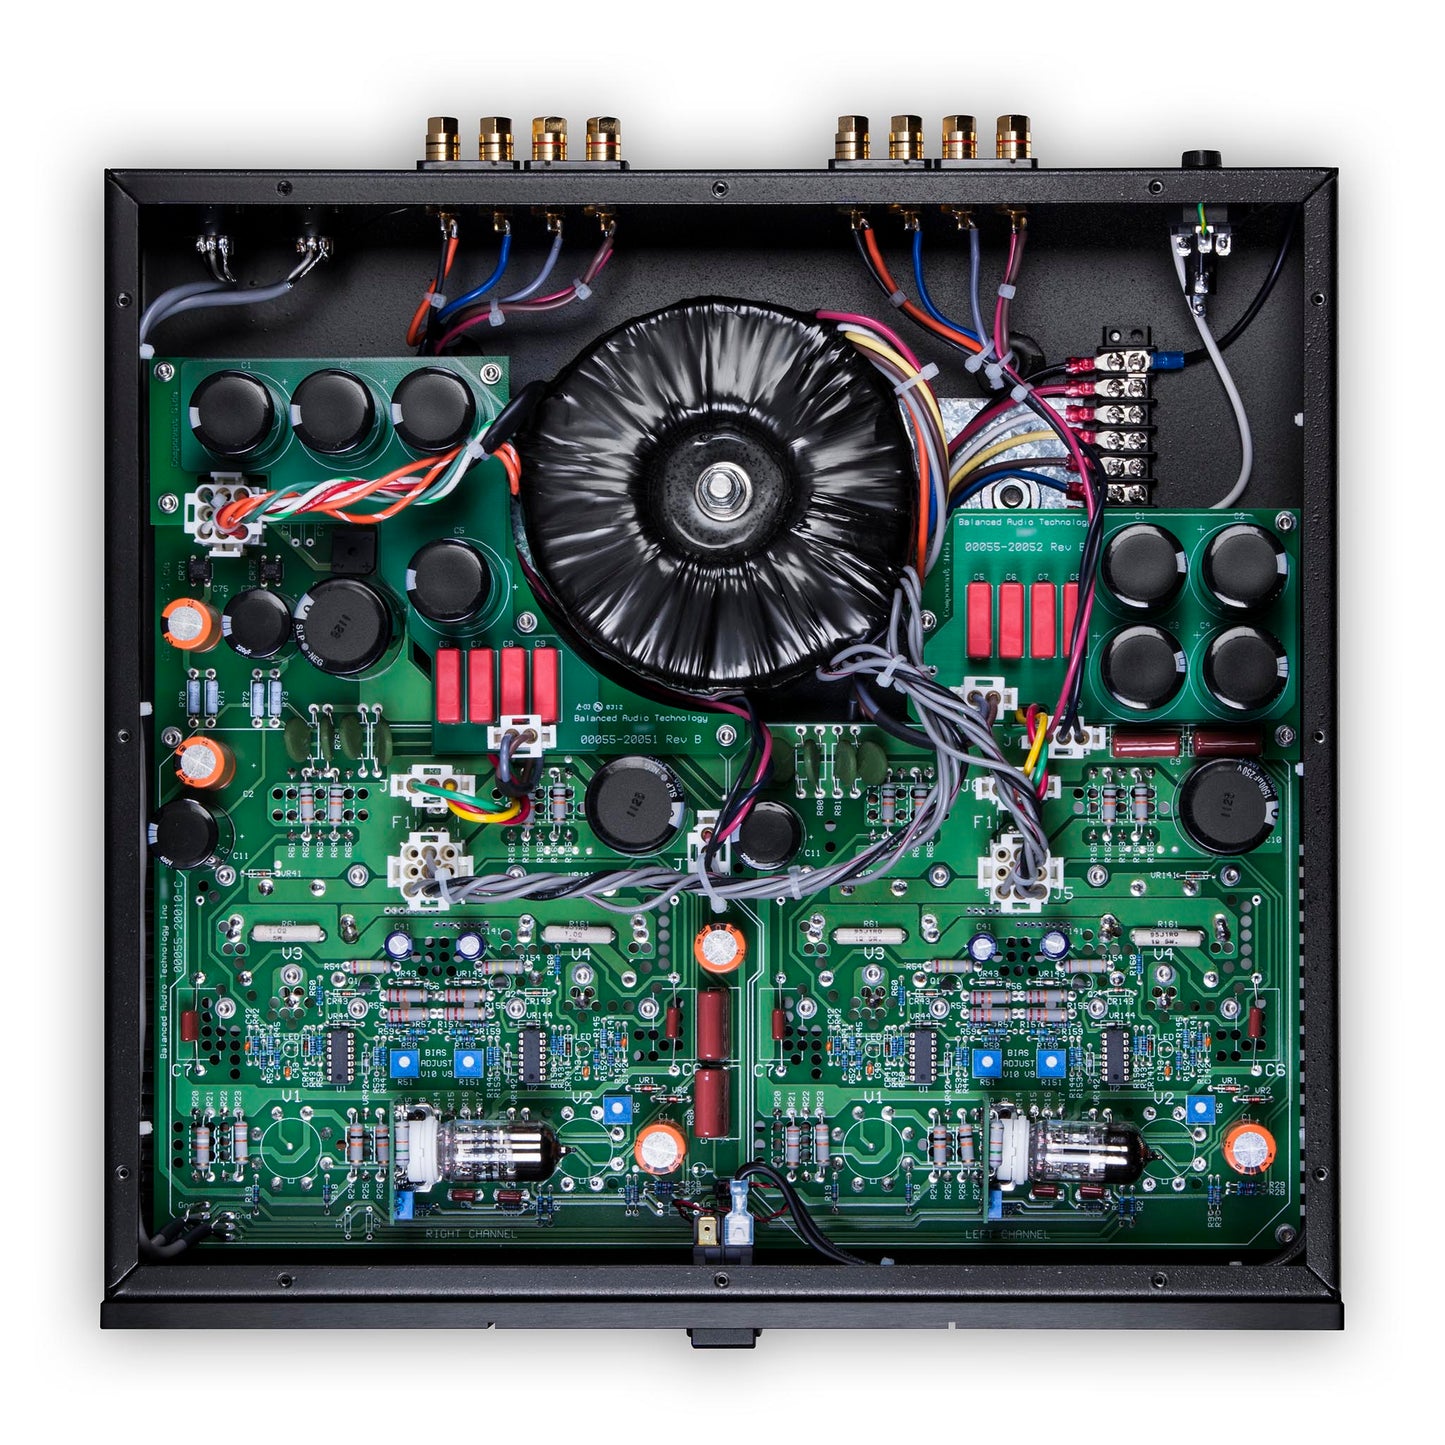 Balanced Audio Technology VK-55SE Power Amplifier